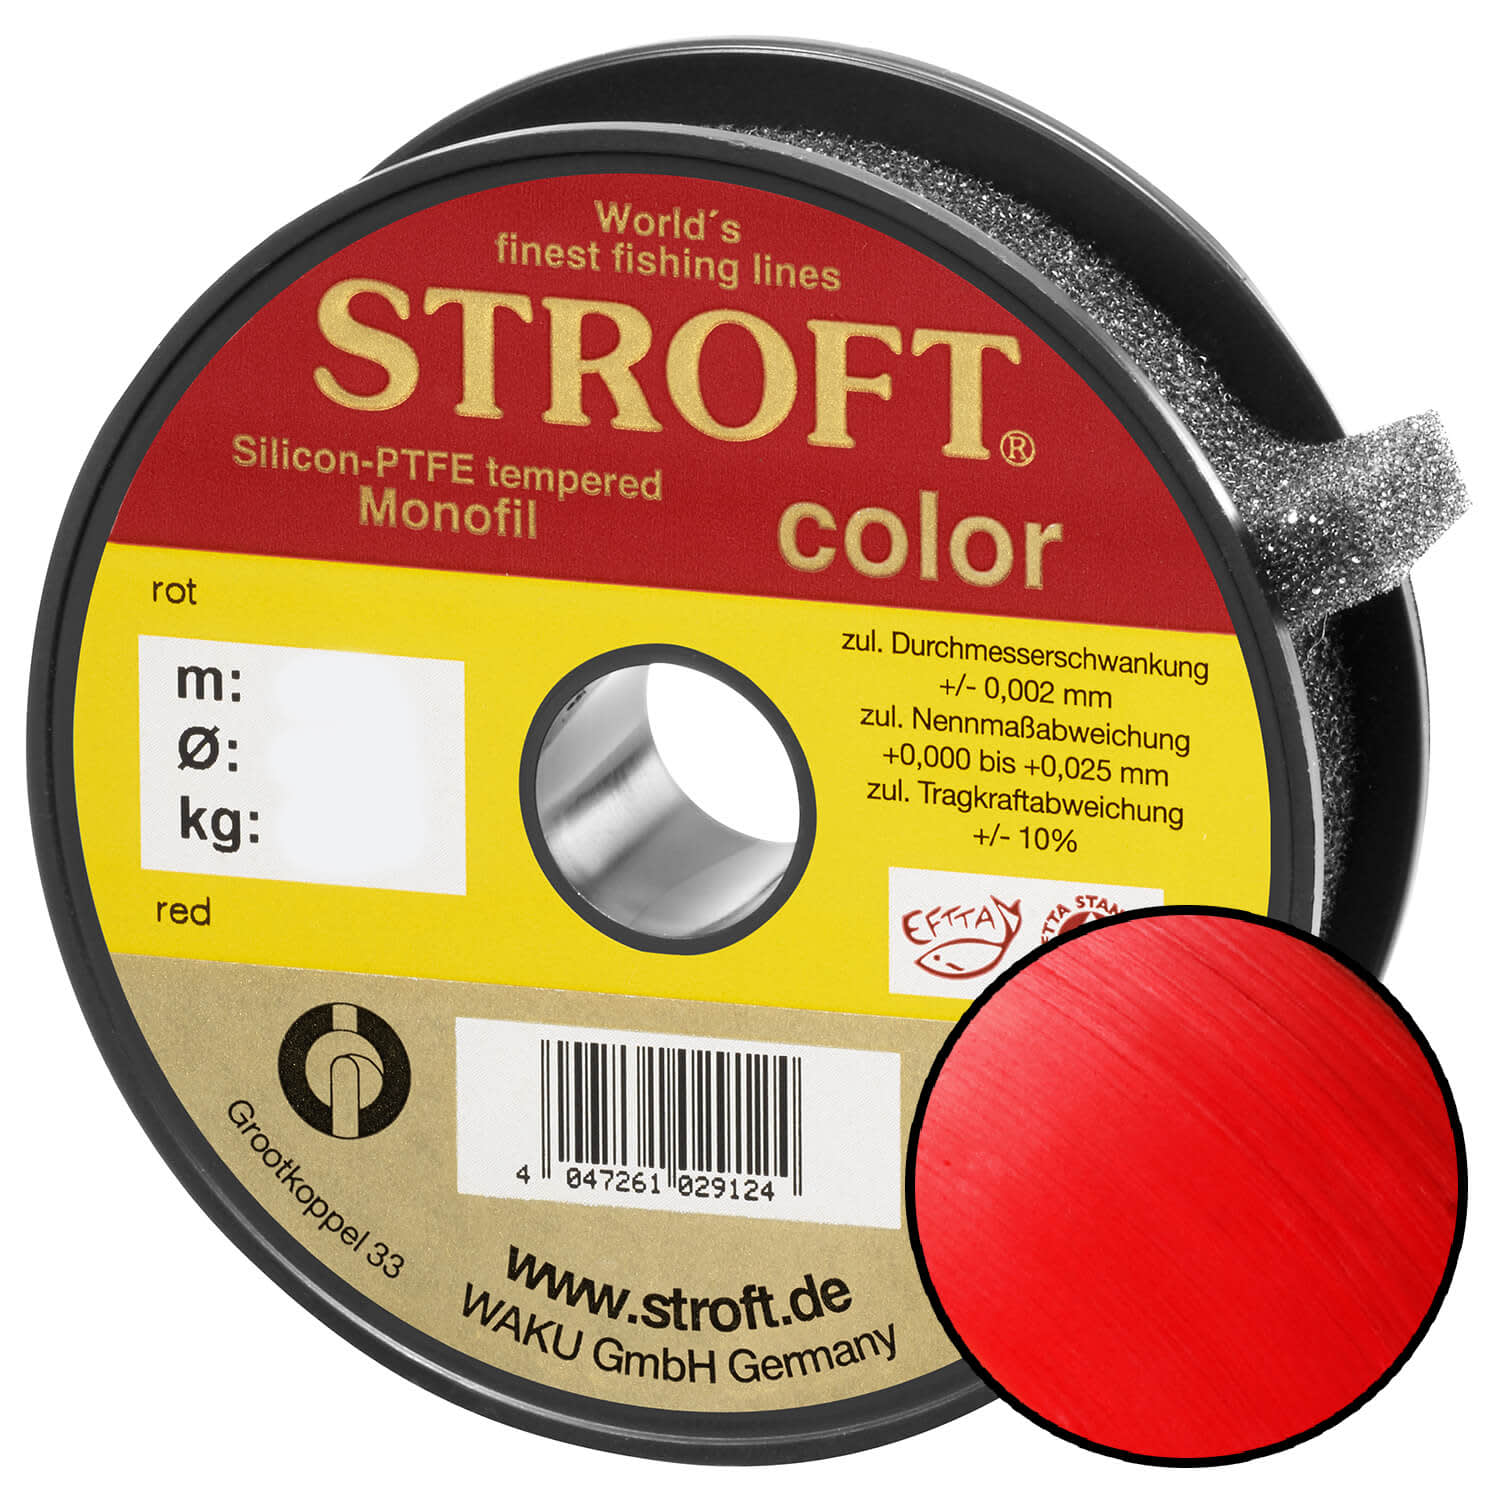 STROFT Color Monofilament Fishing Line Red 0,15mm 2,2kg